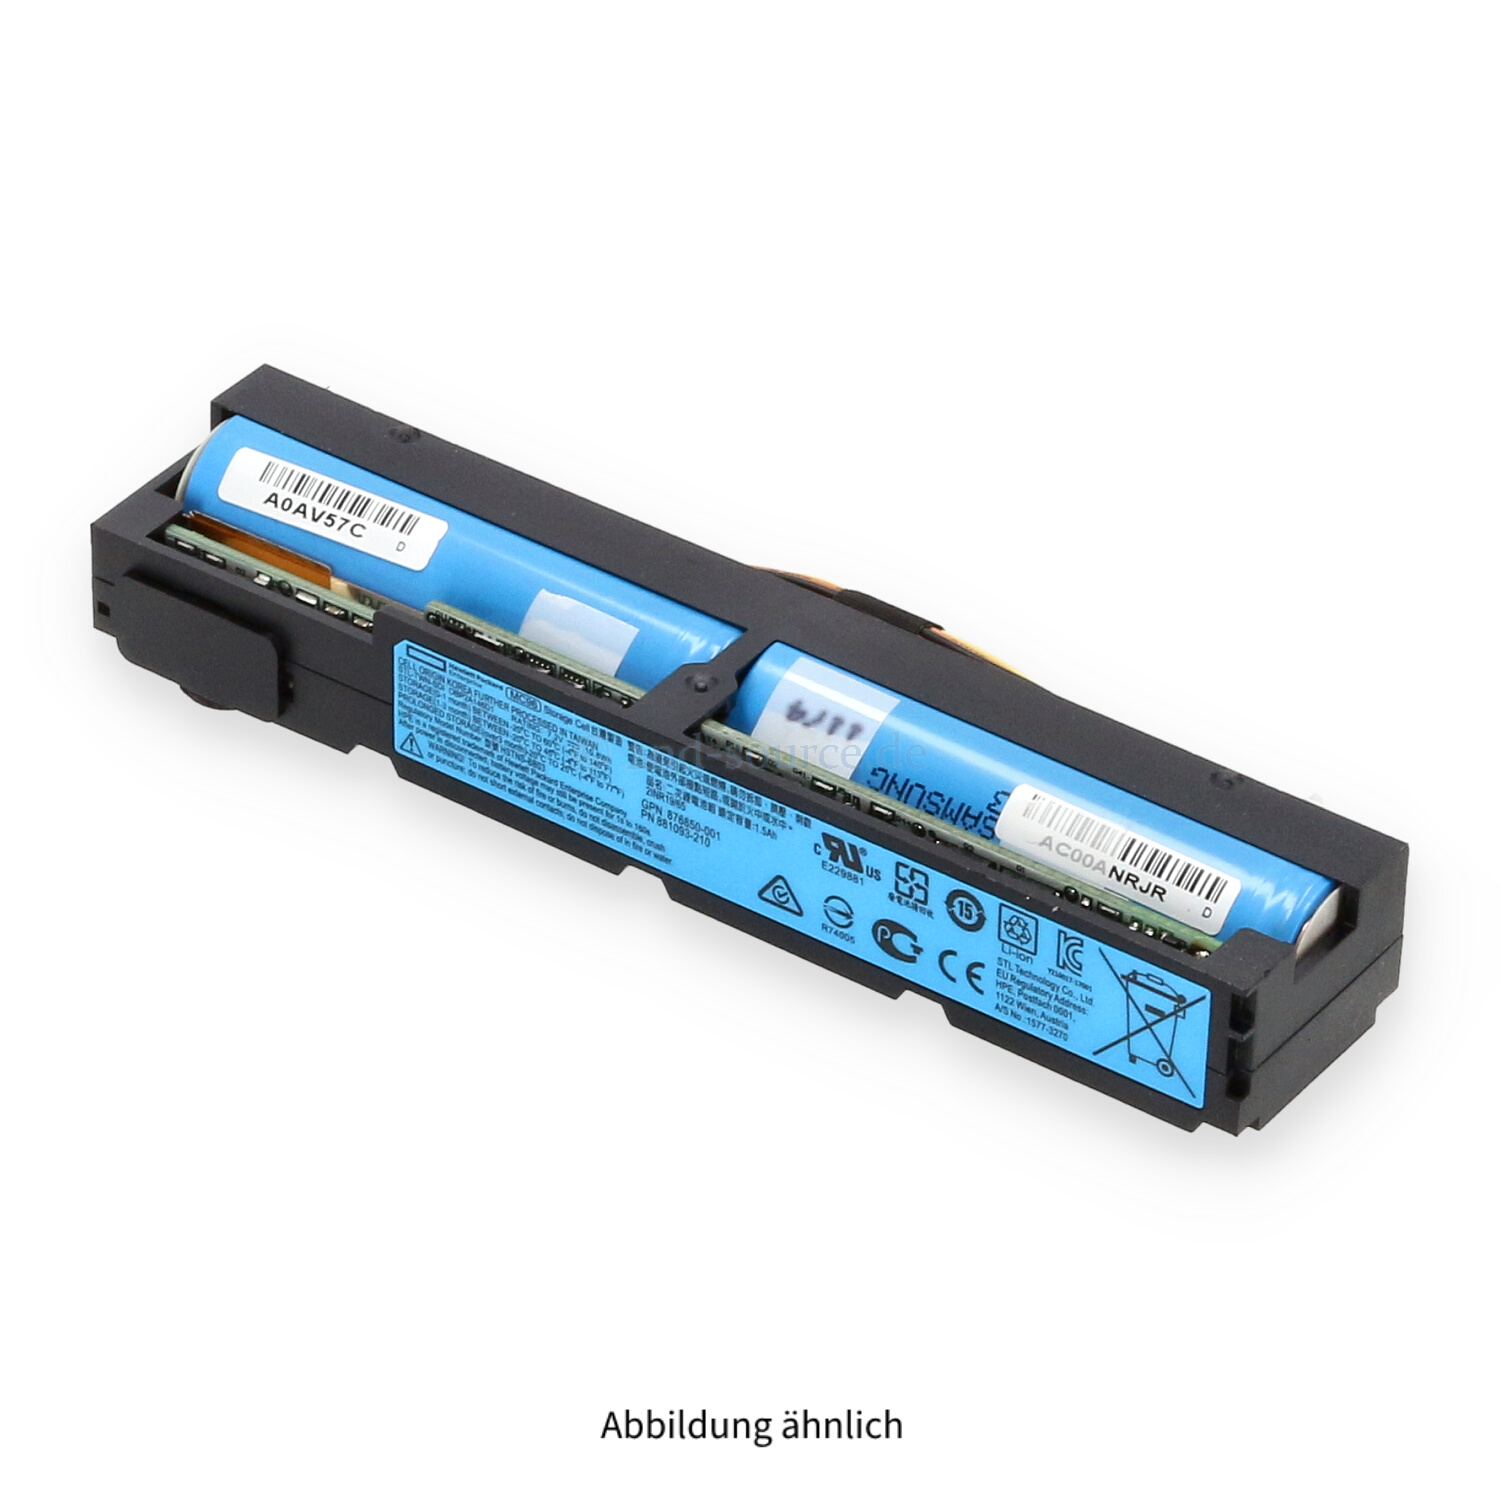 HPE 96W Smart Storage Battery Pack 145mm Kabel 875241-B21 878643-001 876850-001